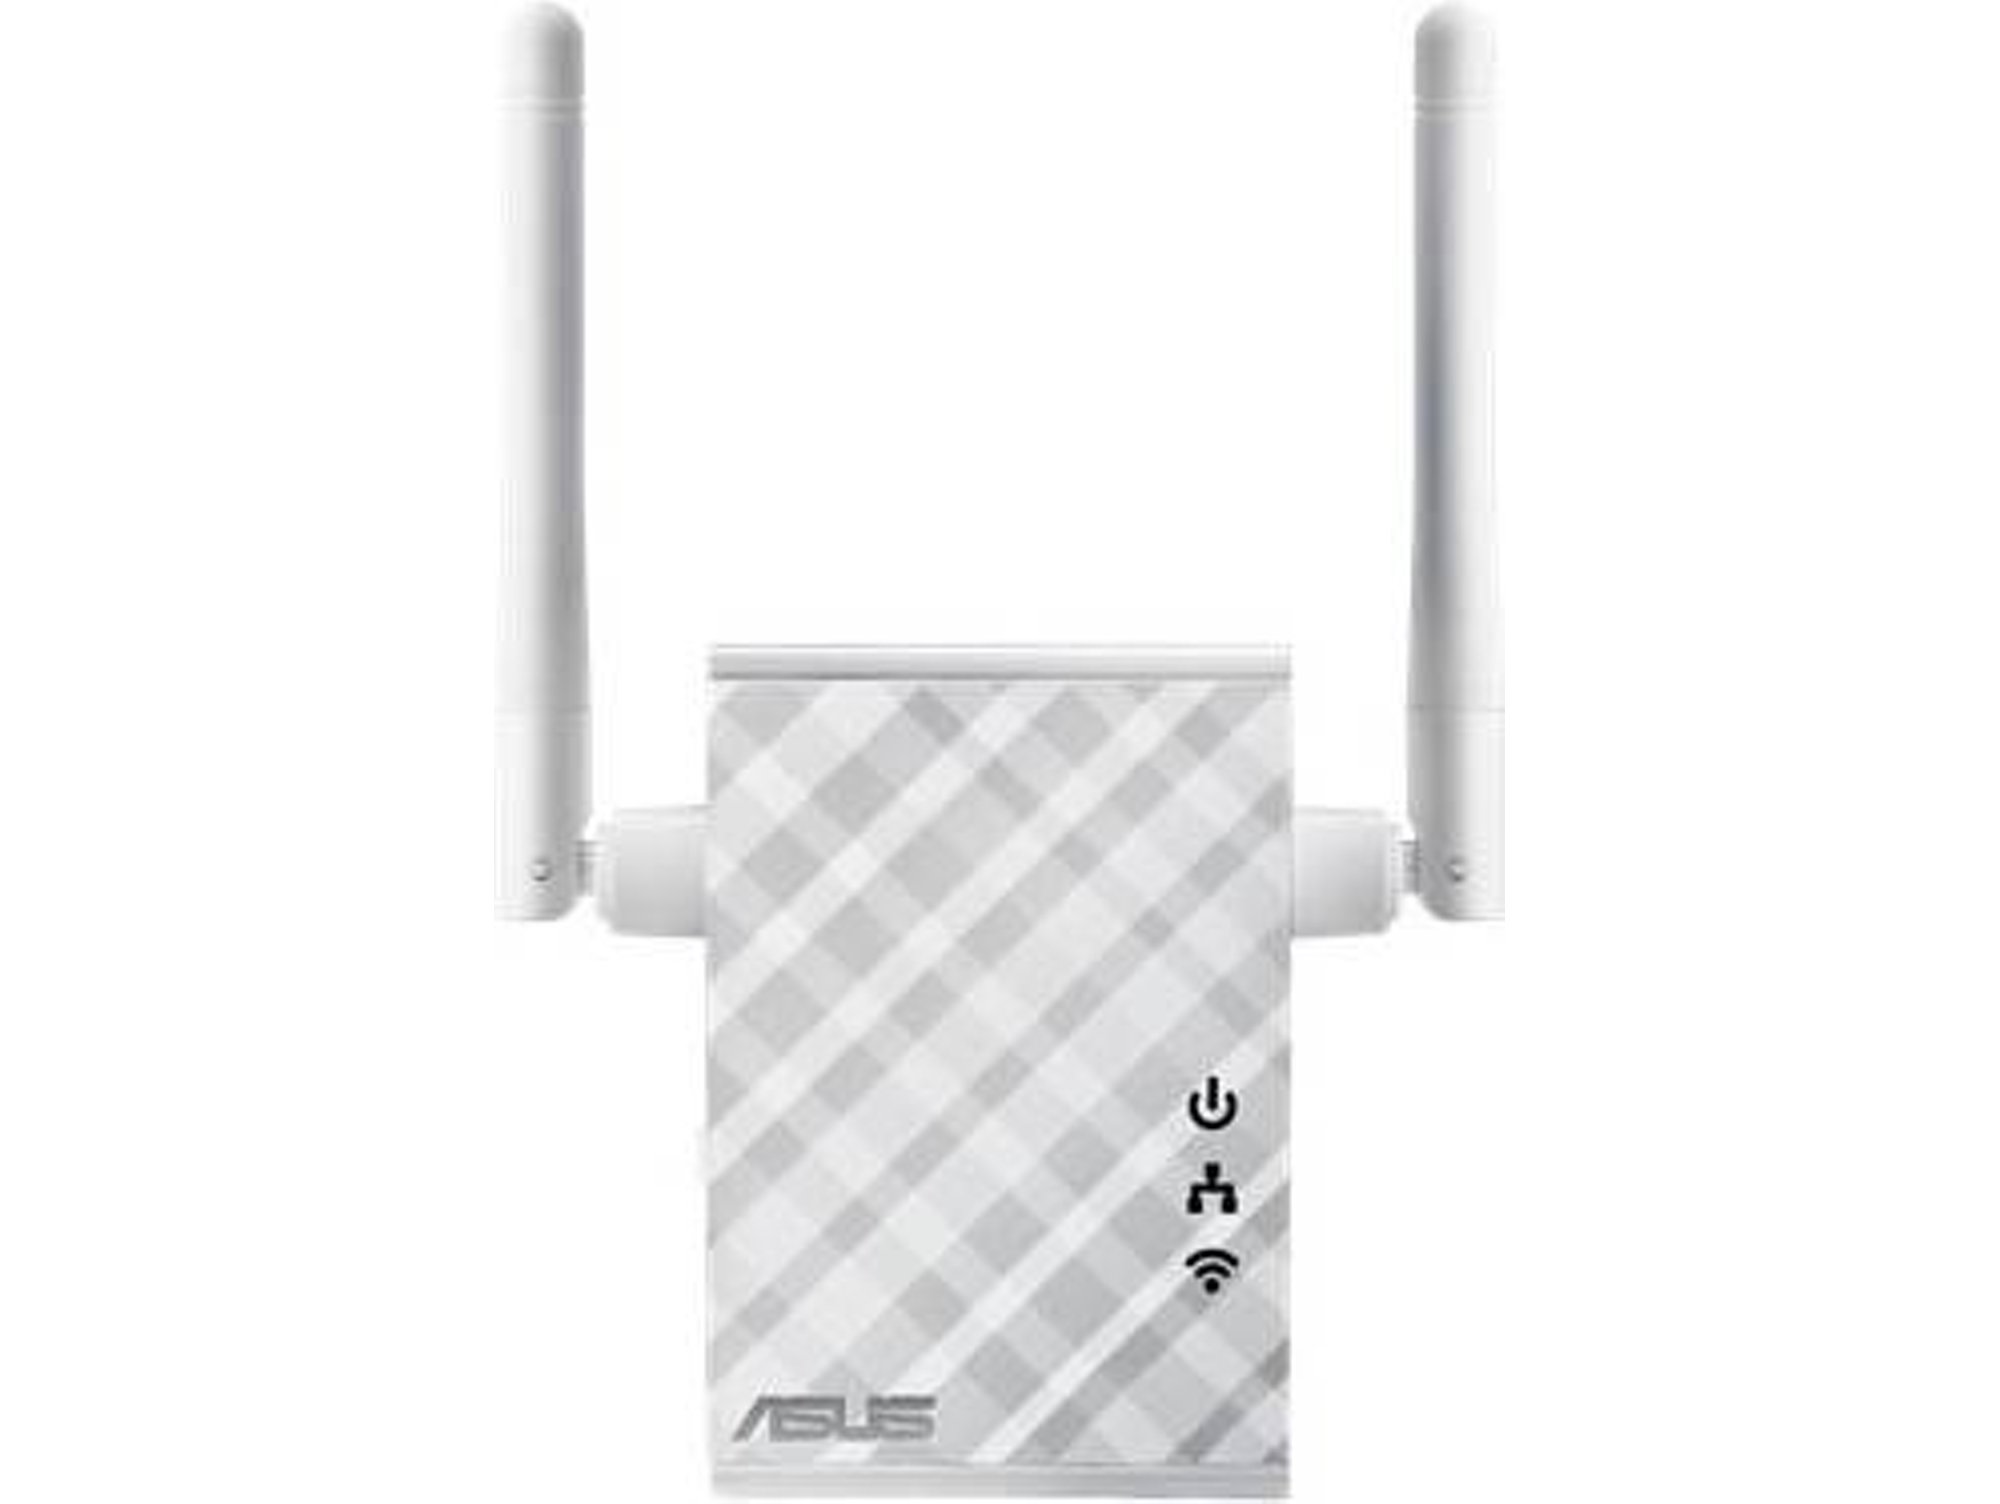 Repetidor Wifi Asus rpn12 n300 puerto lan wps. 3 funciones repetidorpunto de accesobridge extensor red acceso 300mbps 100mbits wlan router wir n300mbps 90ig01x0bo210 10 100 2